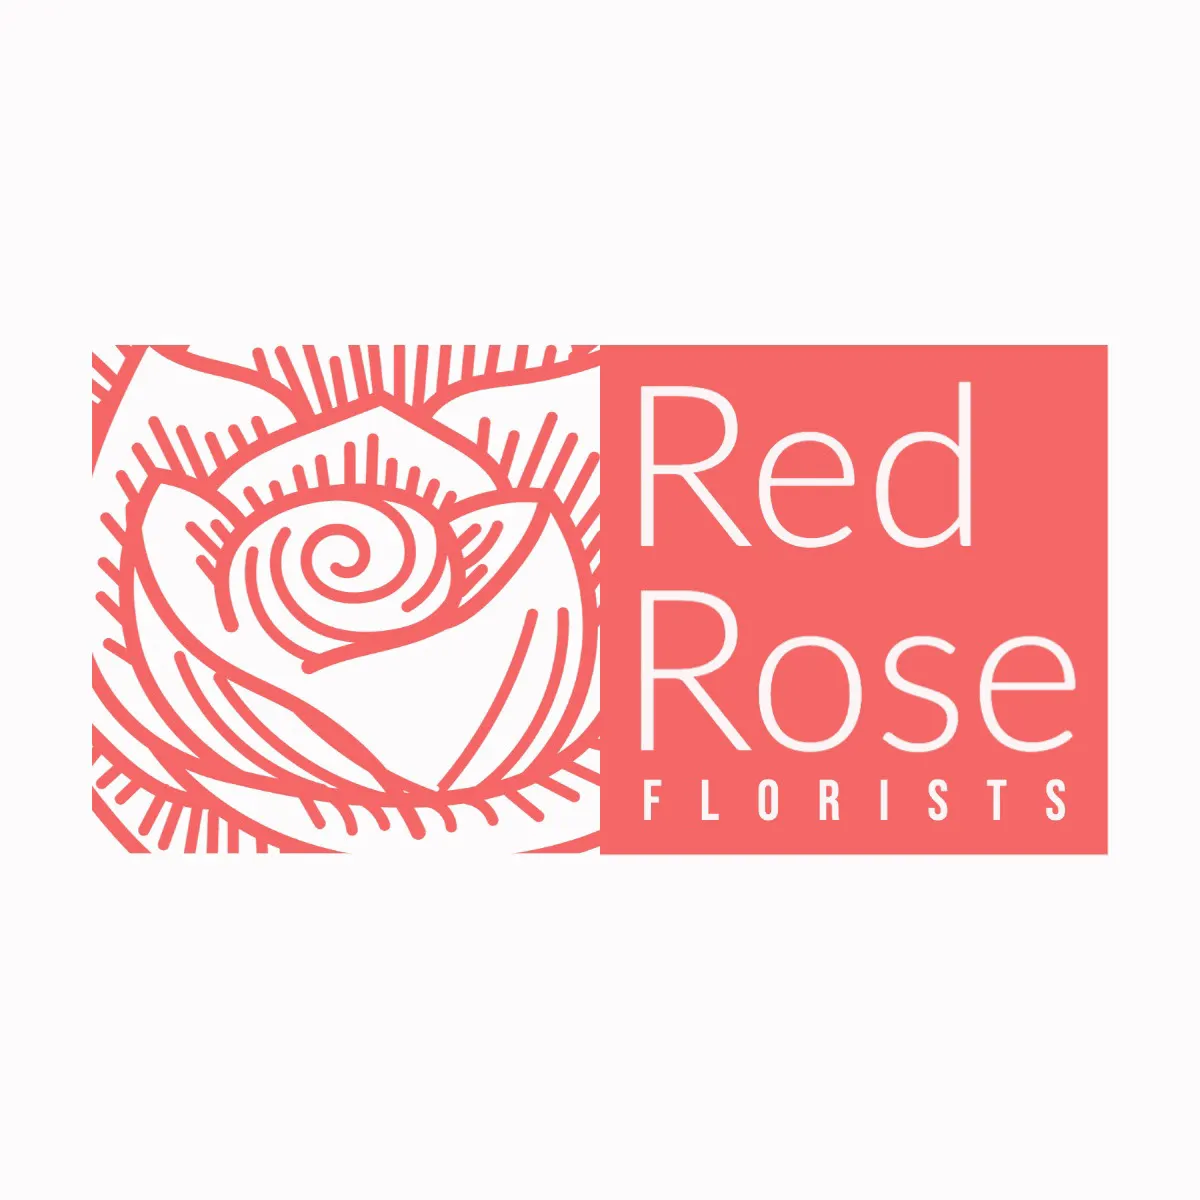 Pink And White Rose Florist Logo